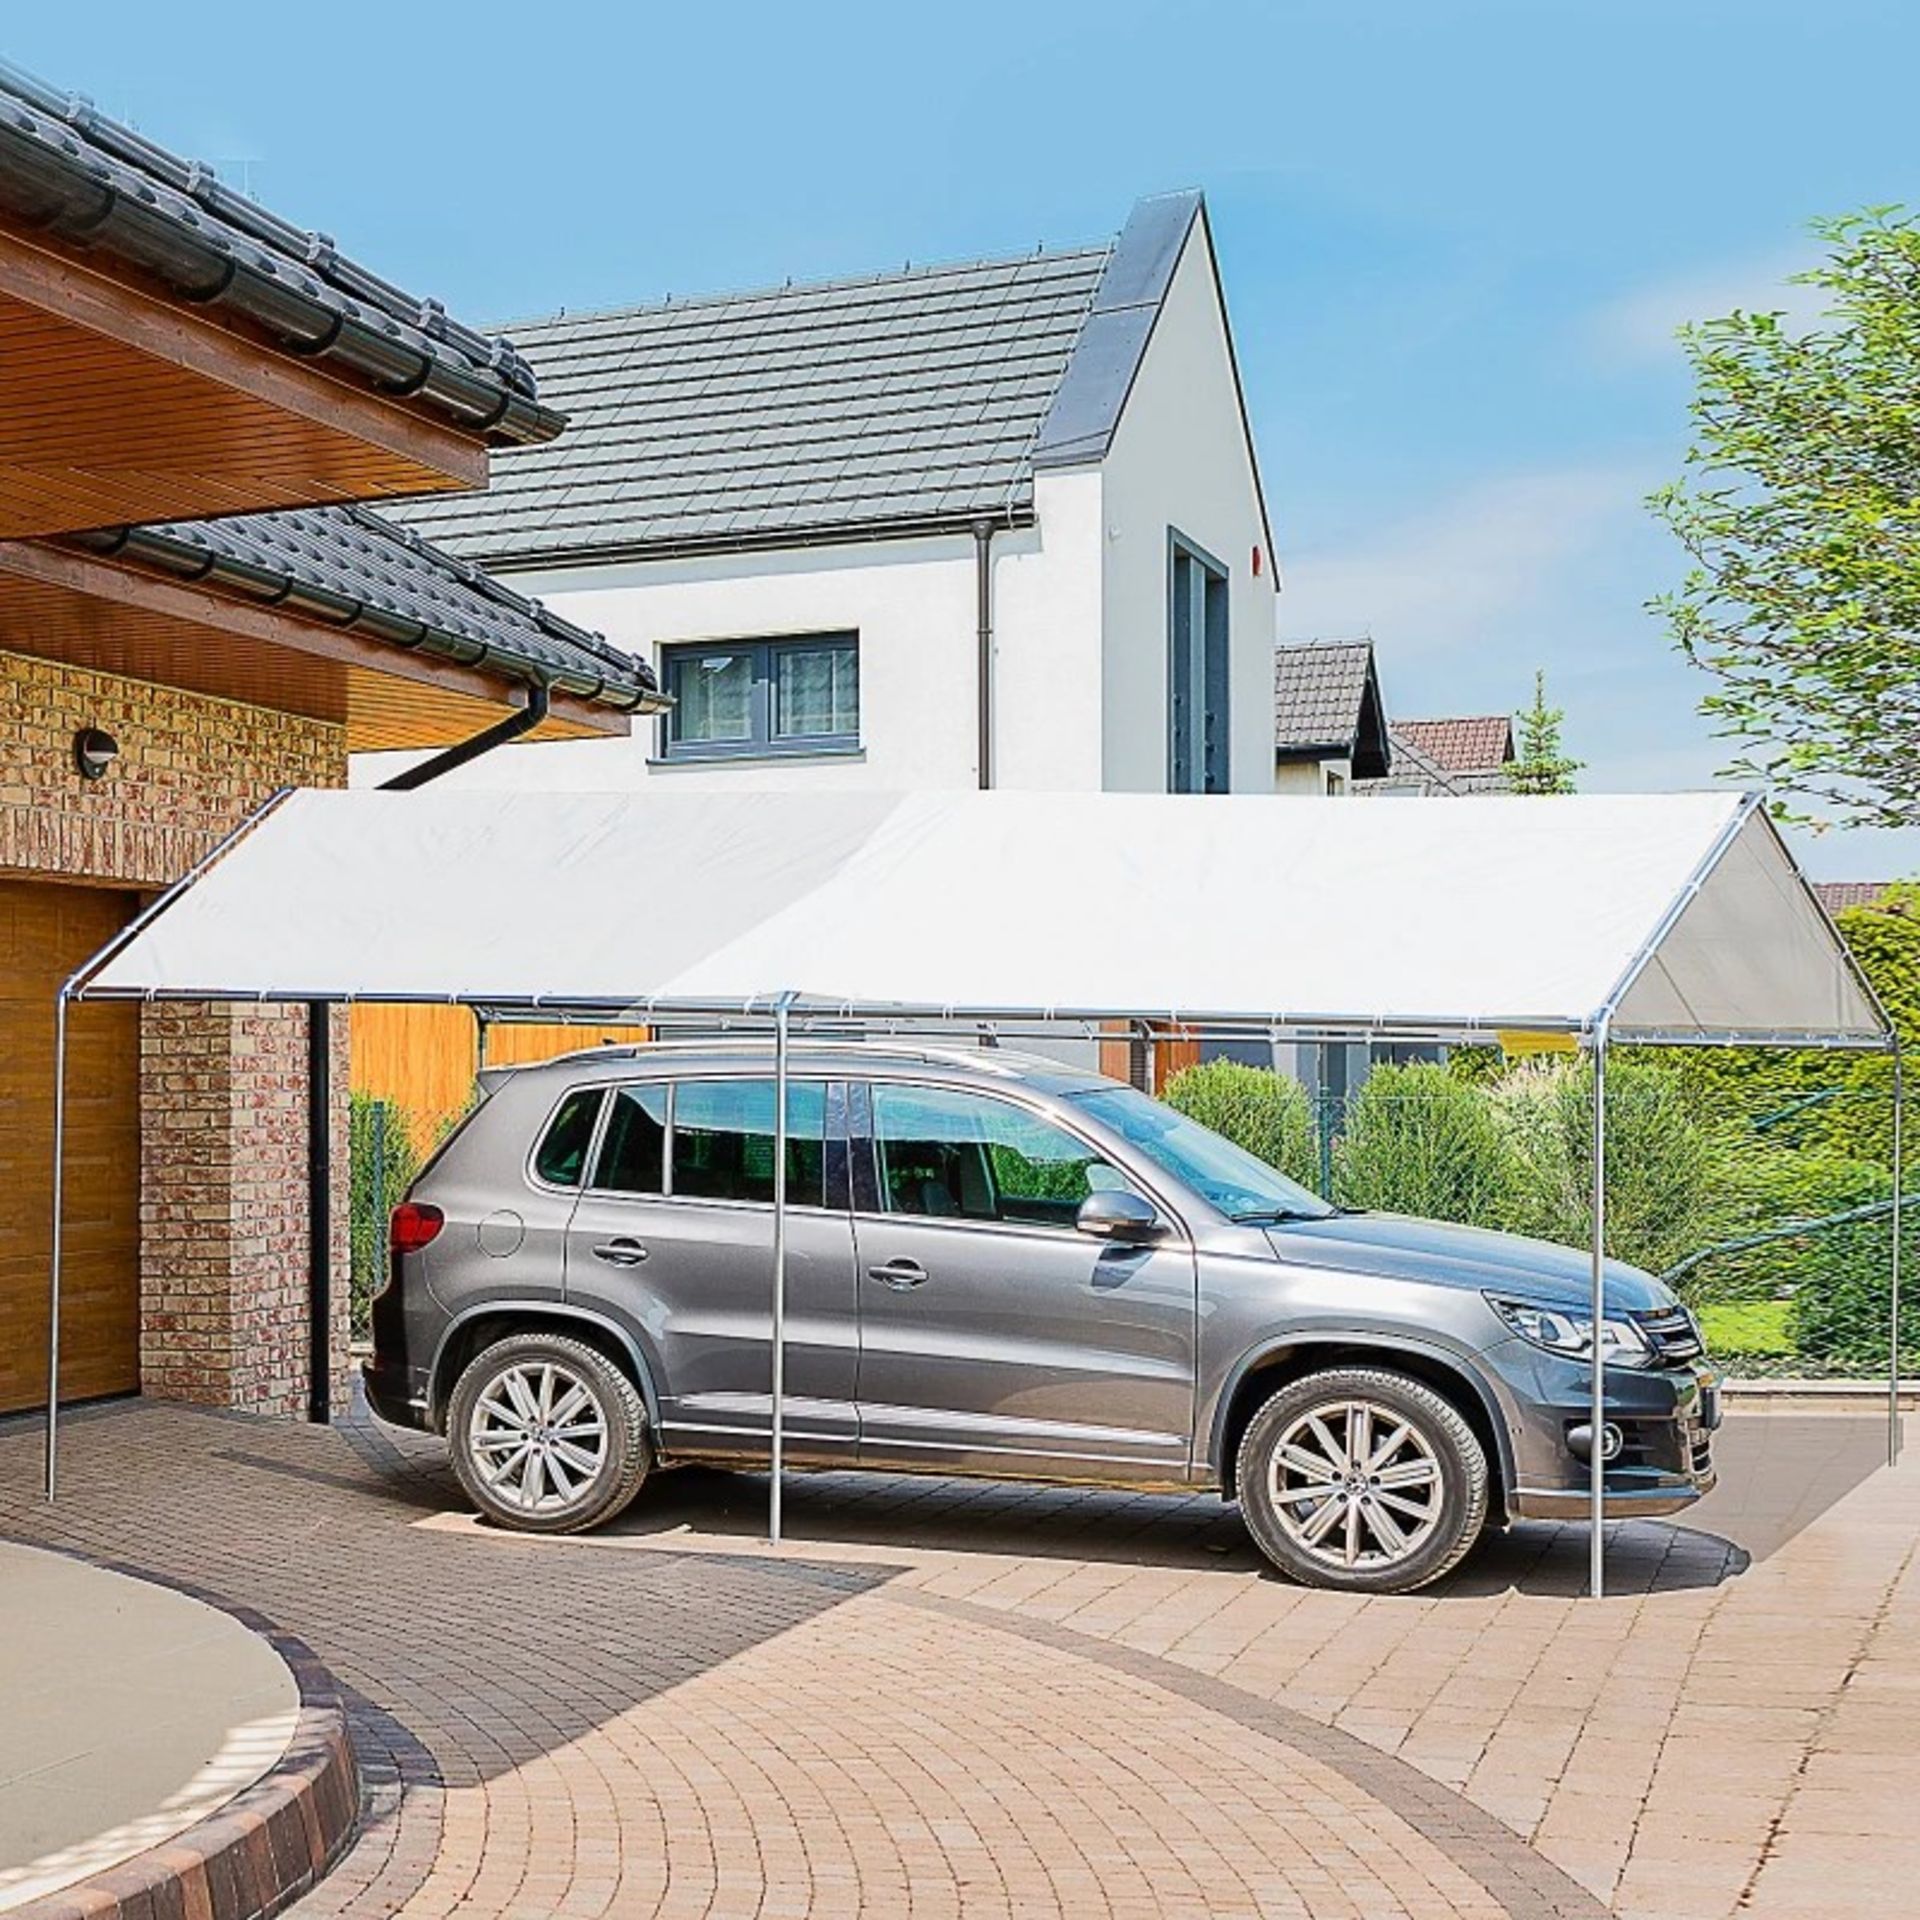 RRP £192.99 - 3 x 6m Heavy Duty Carport Garage Car Shelter Galvanized Steel Outdoor Open Canopy